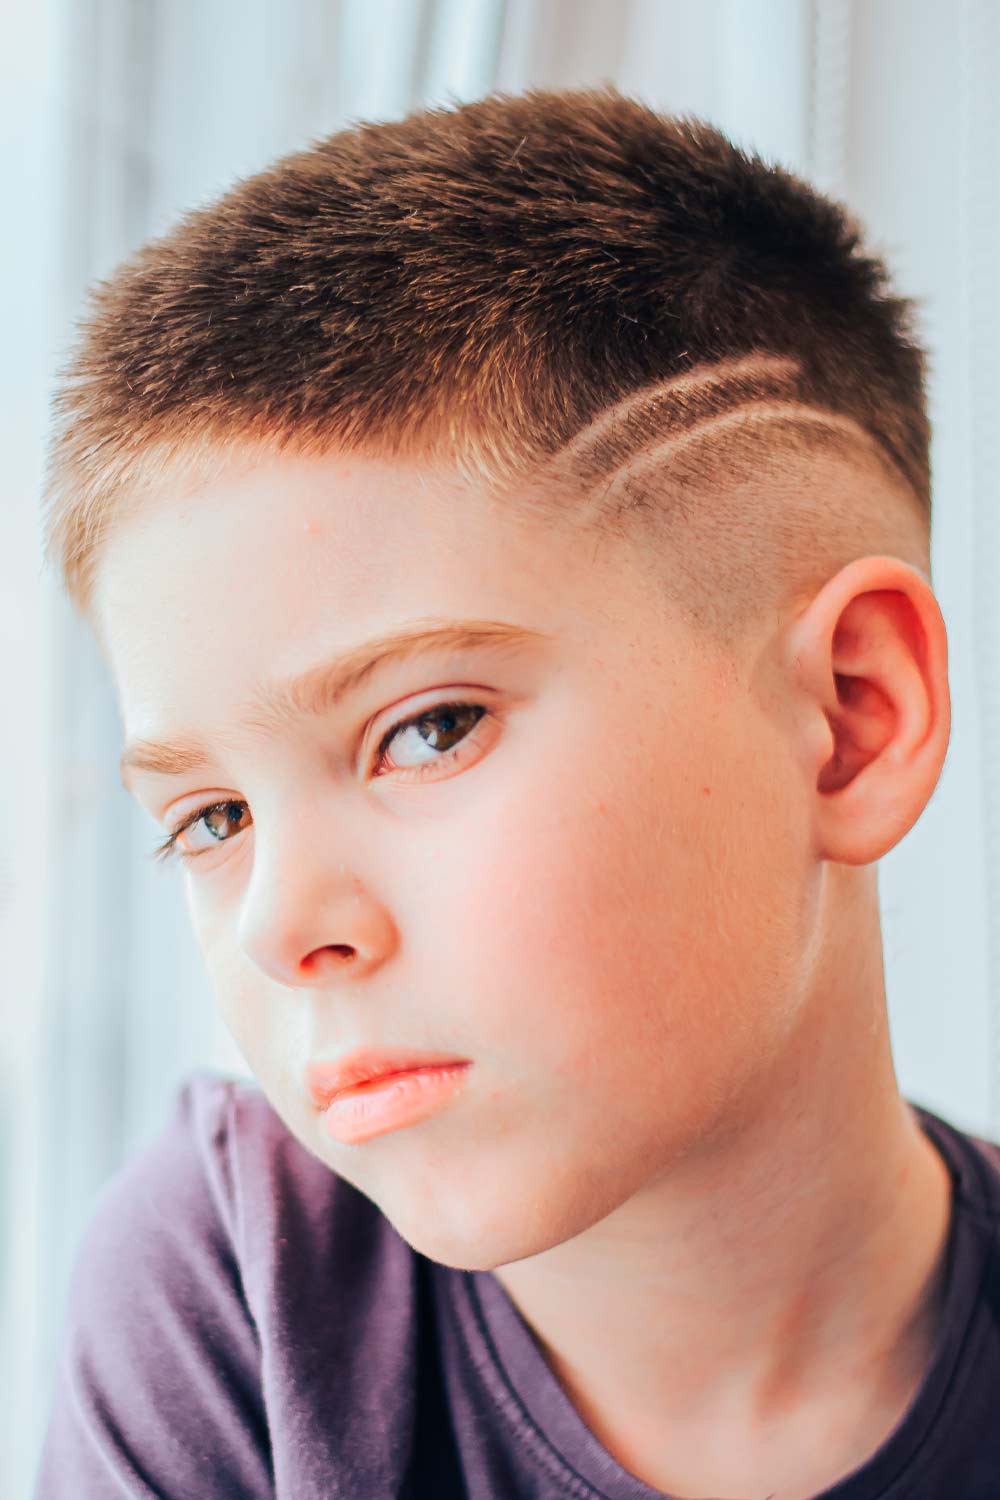 Hair Cuts For Boys (@haircutsforboys) • Instagram photos and videos